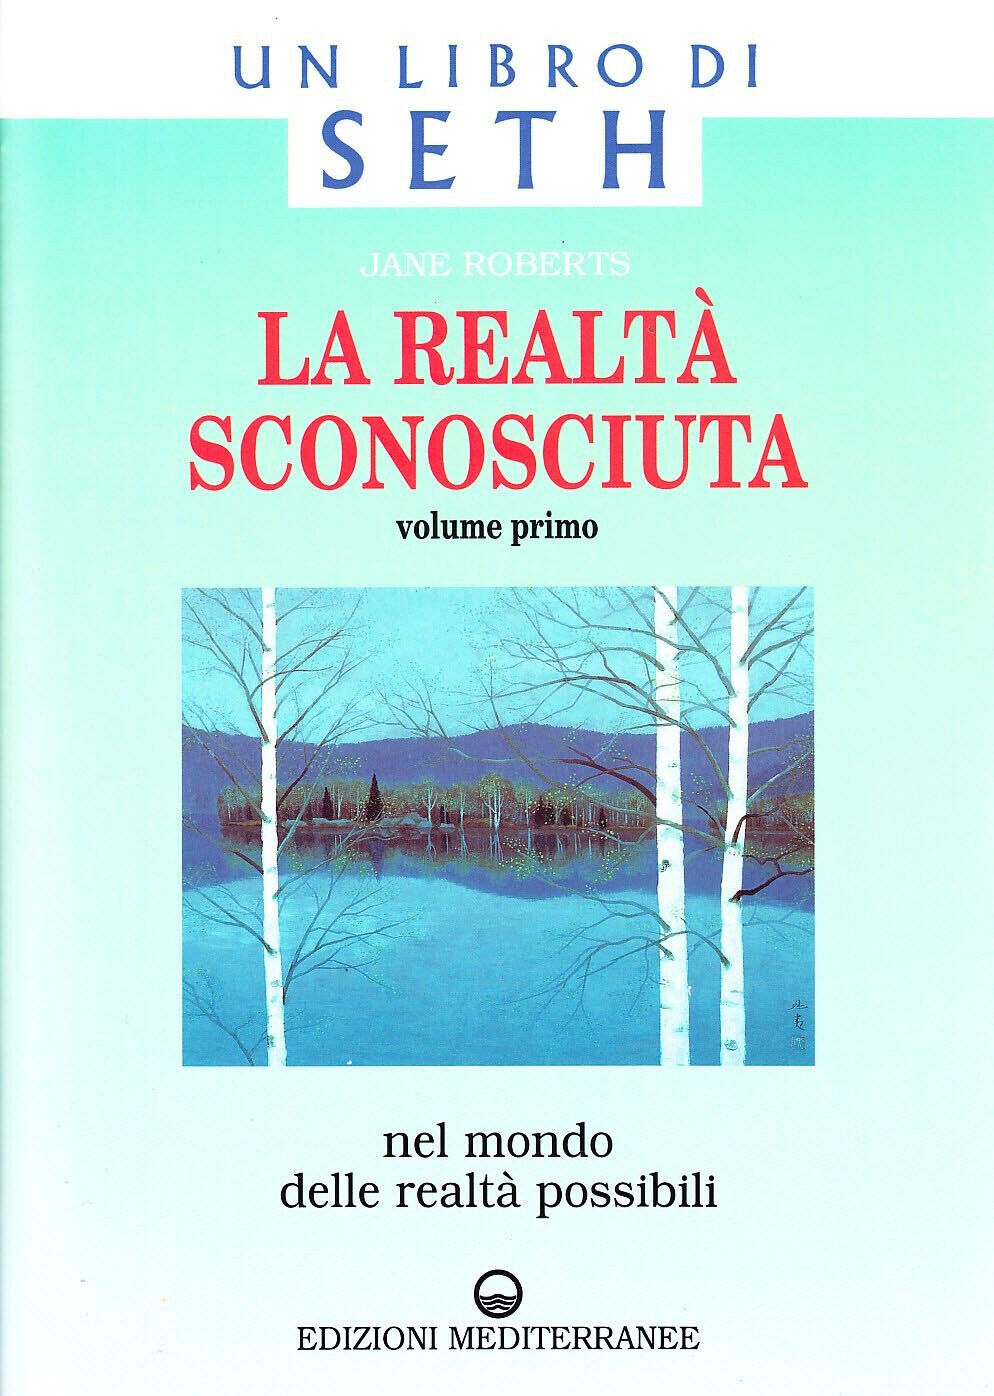 La realt? sconosciuta vol.1 - Jane Roberts - Edizioni Mediterranee, 1997